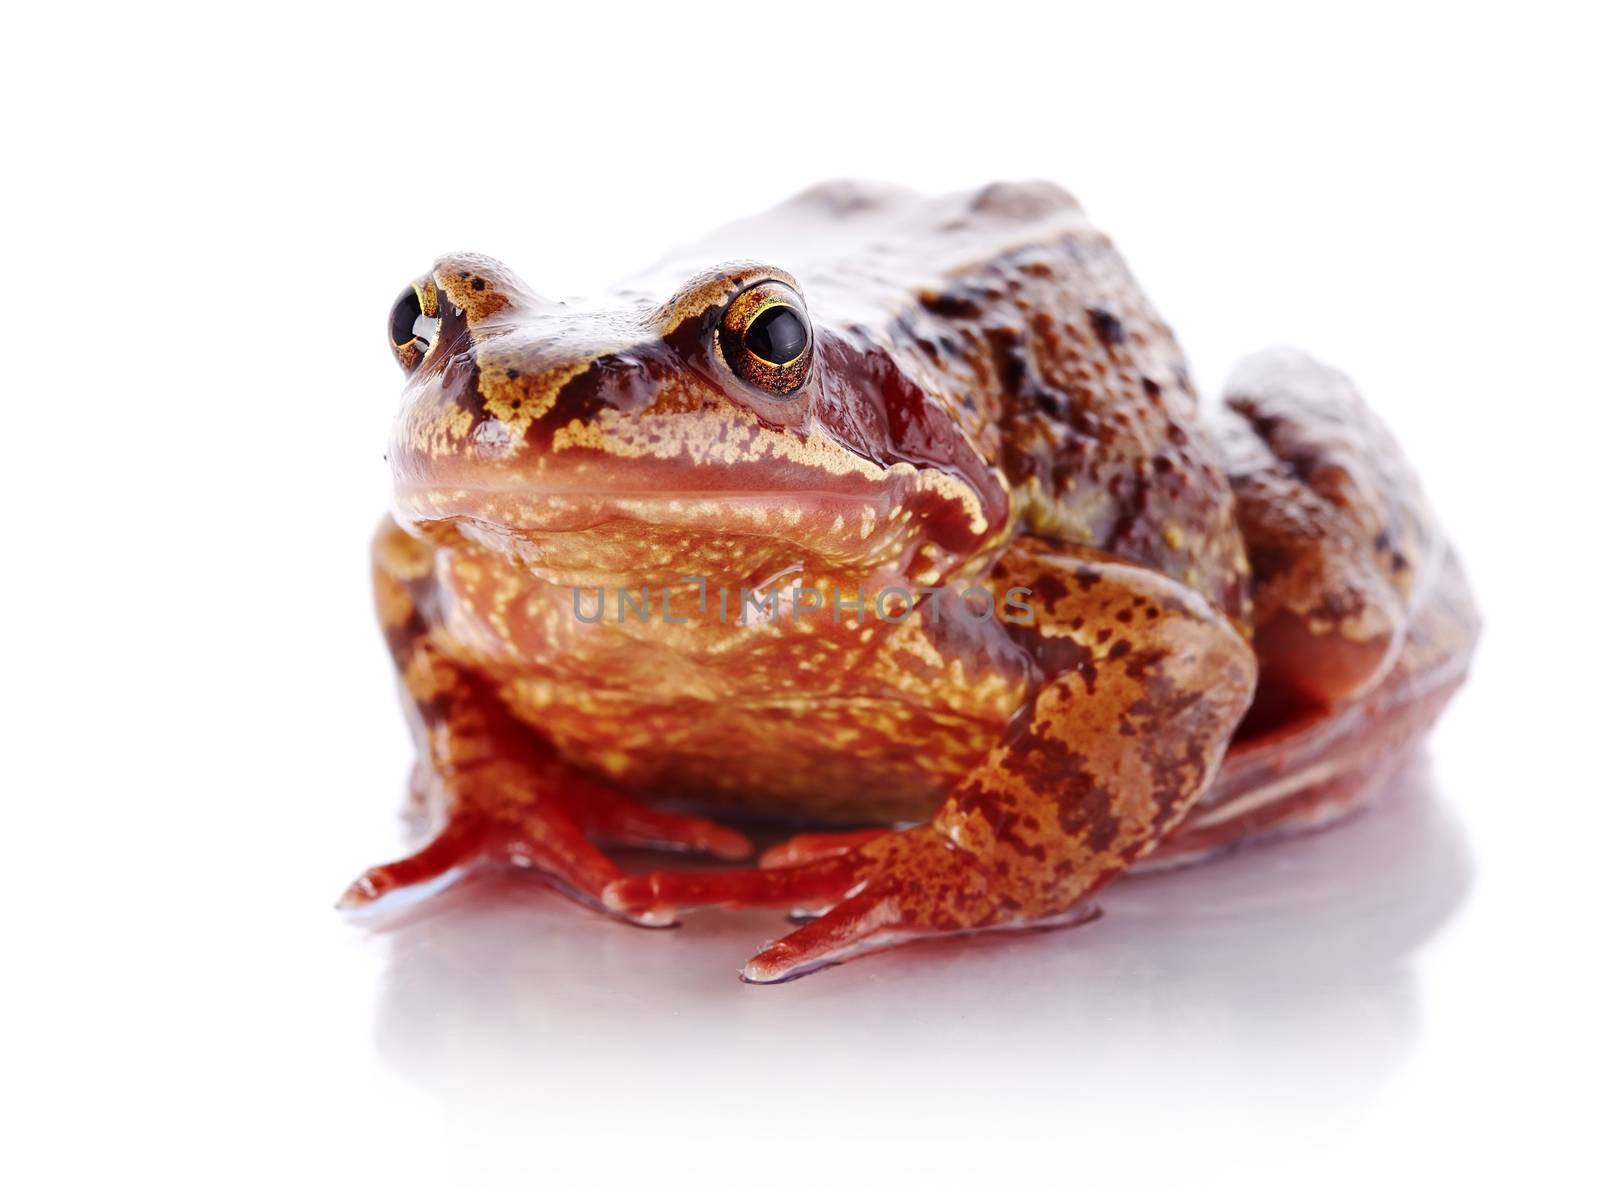 Common frog. Wet frog. Amphibian. Brown frog.